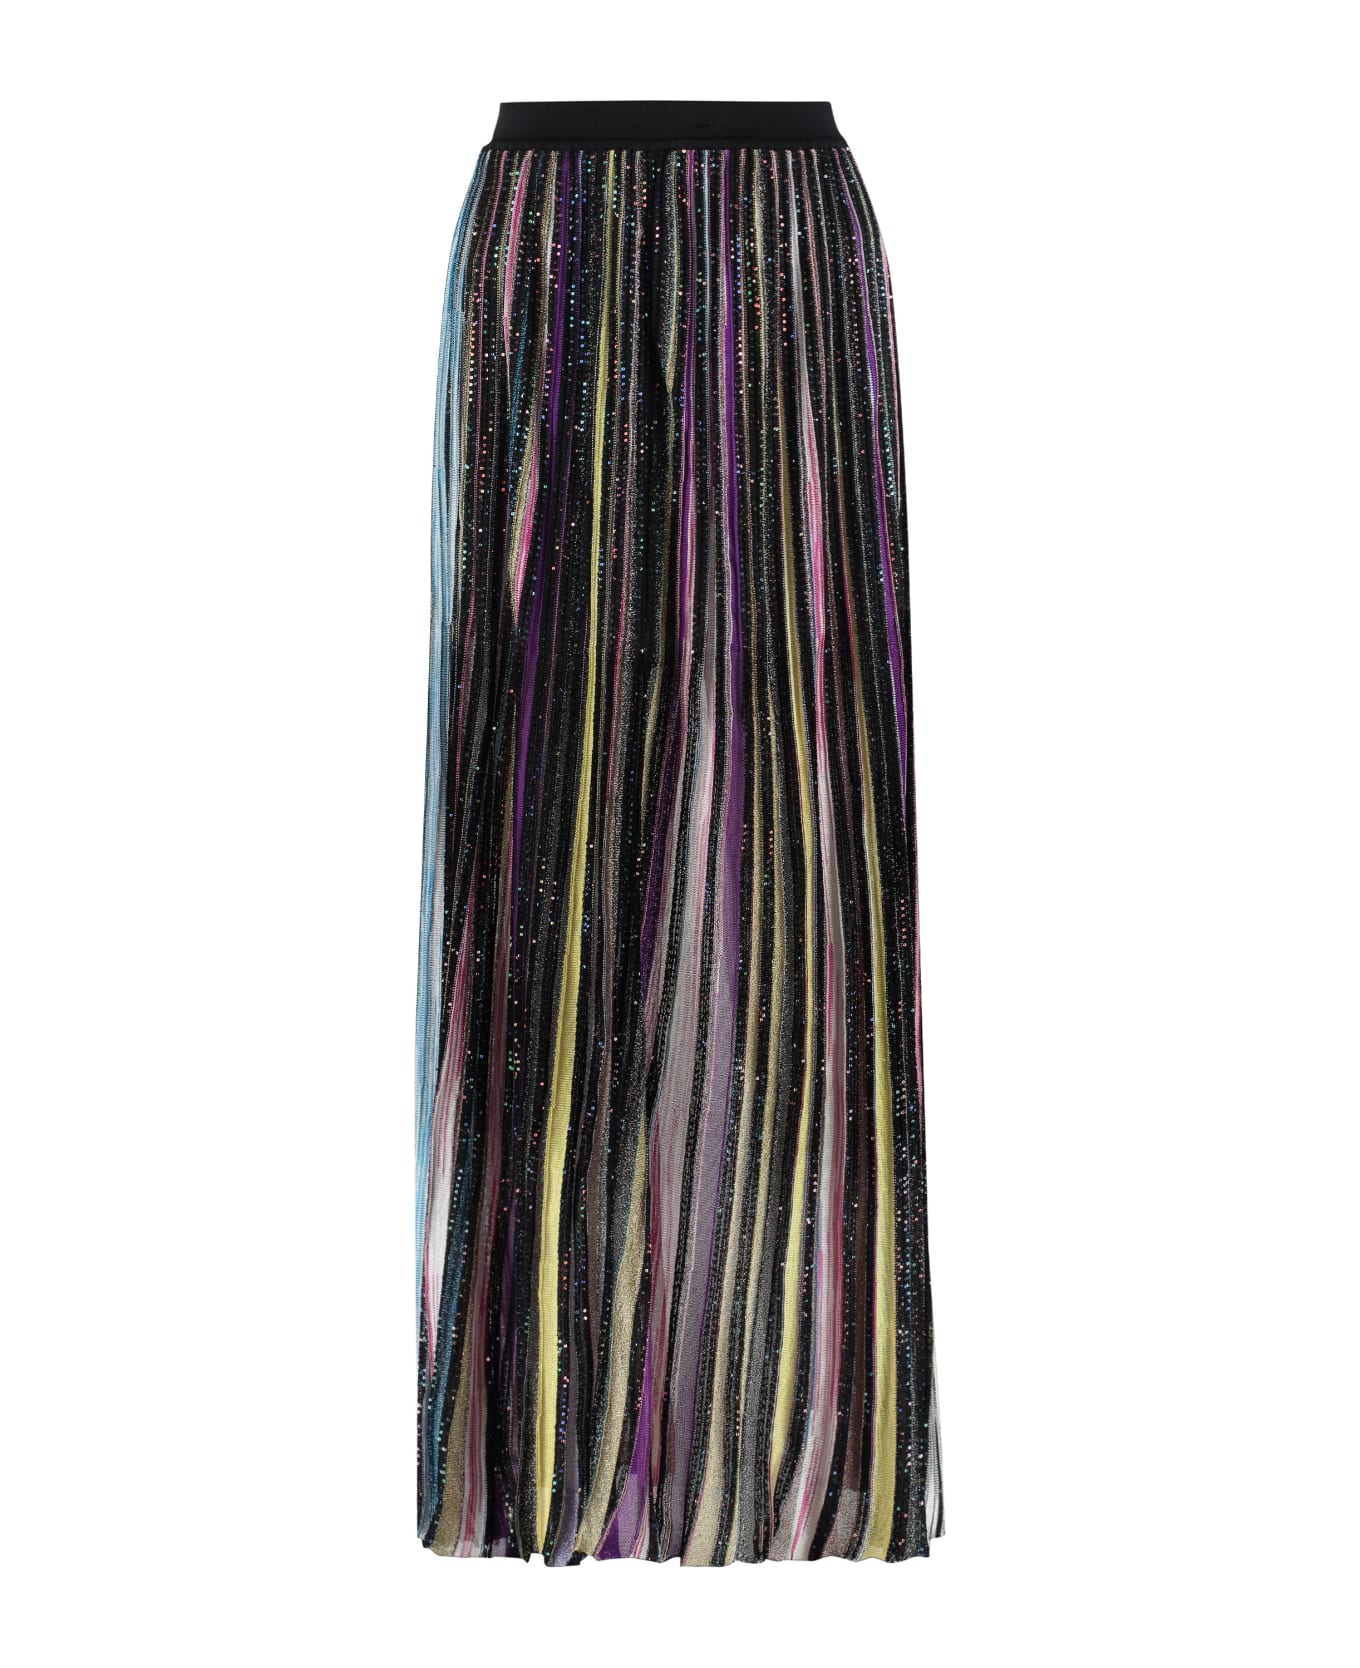 Missoni Knitted Lurex Skirt - Nero/multicolour スカート